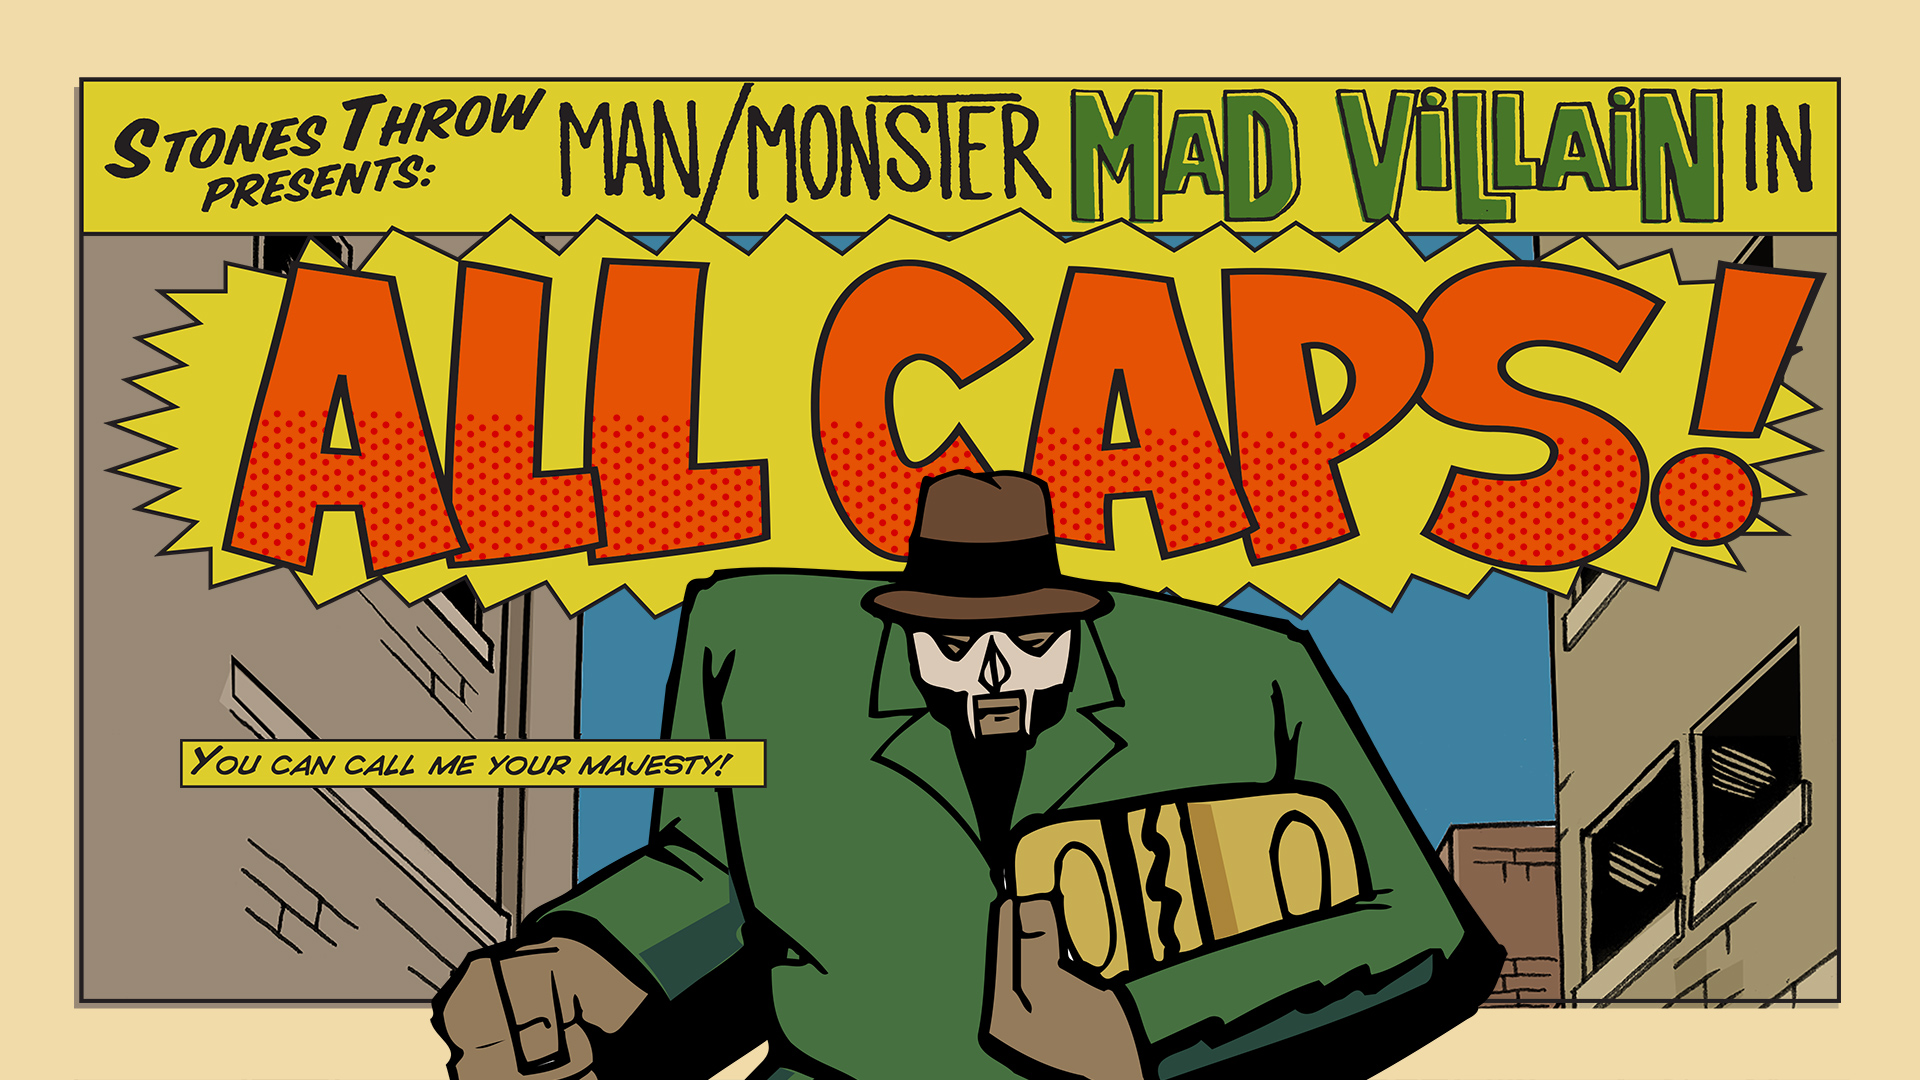 Madvillain's All Caps Video. Stones Throw Records